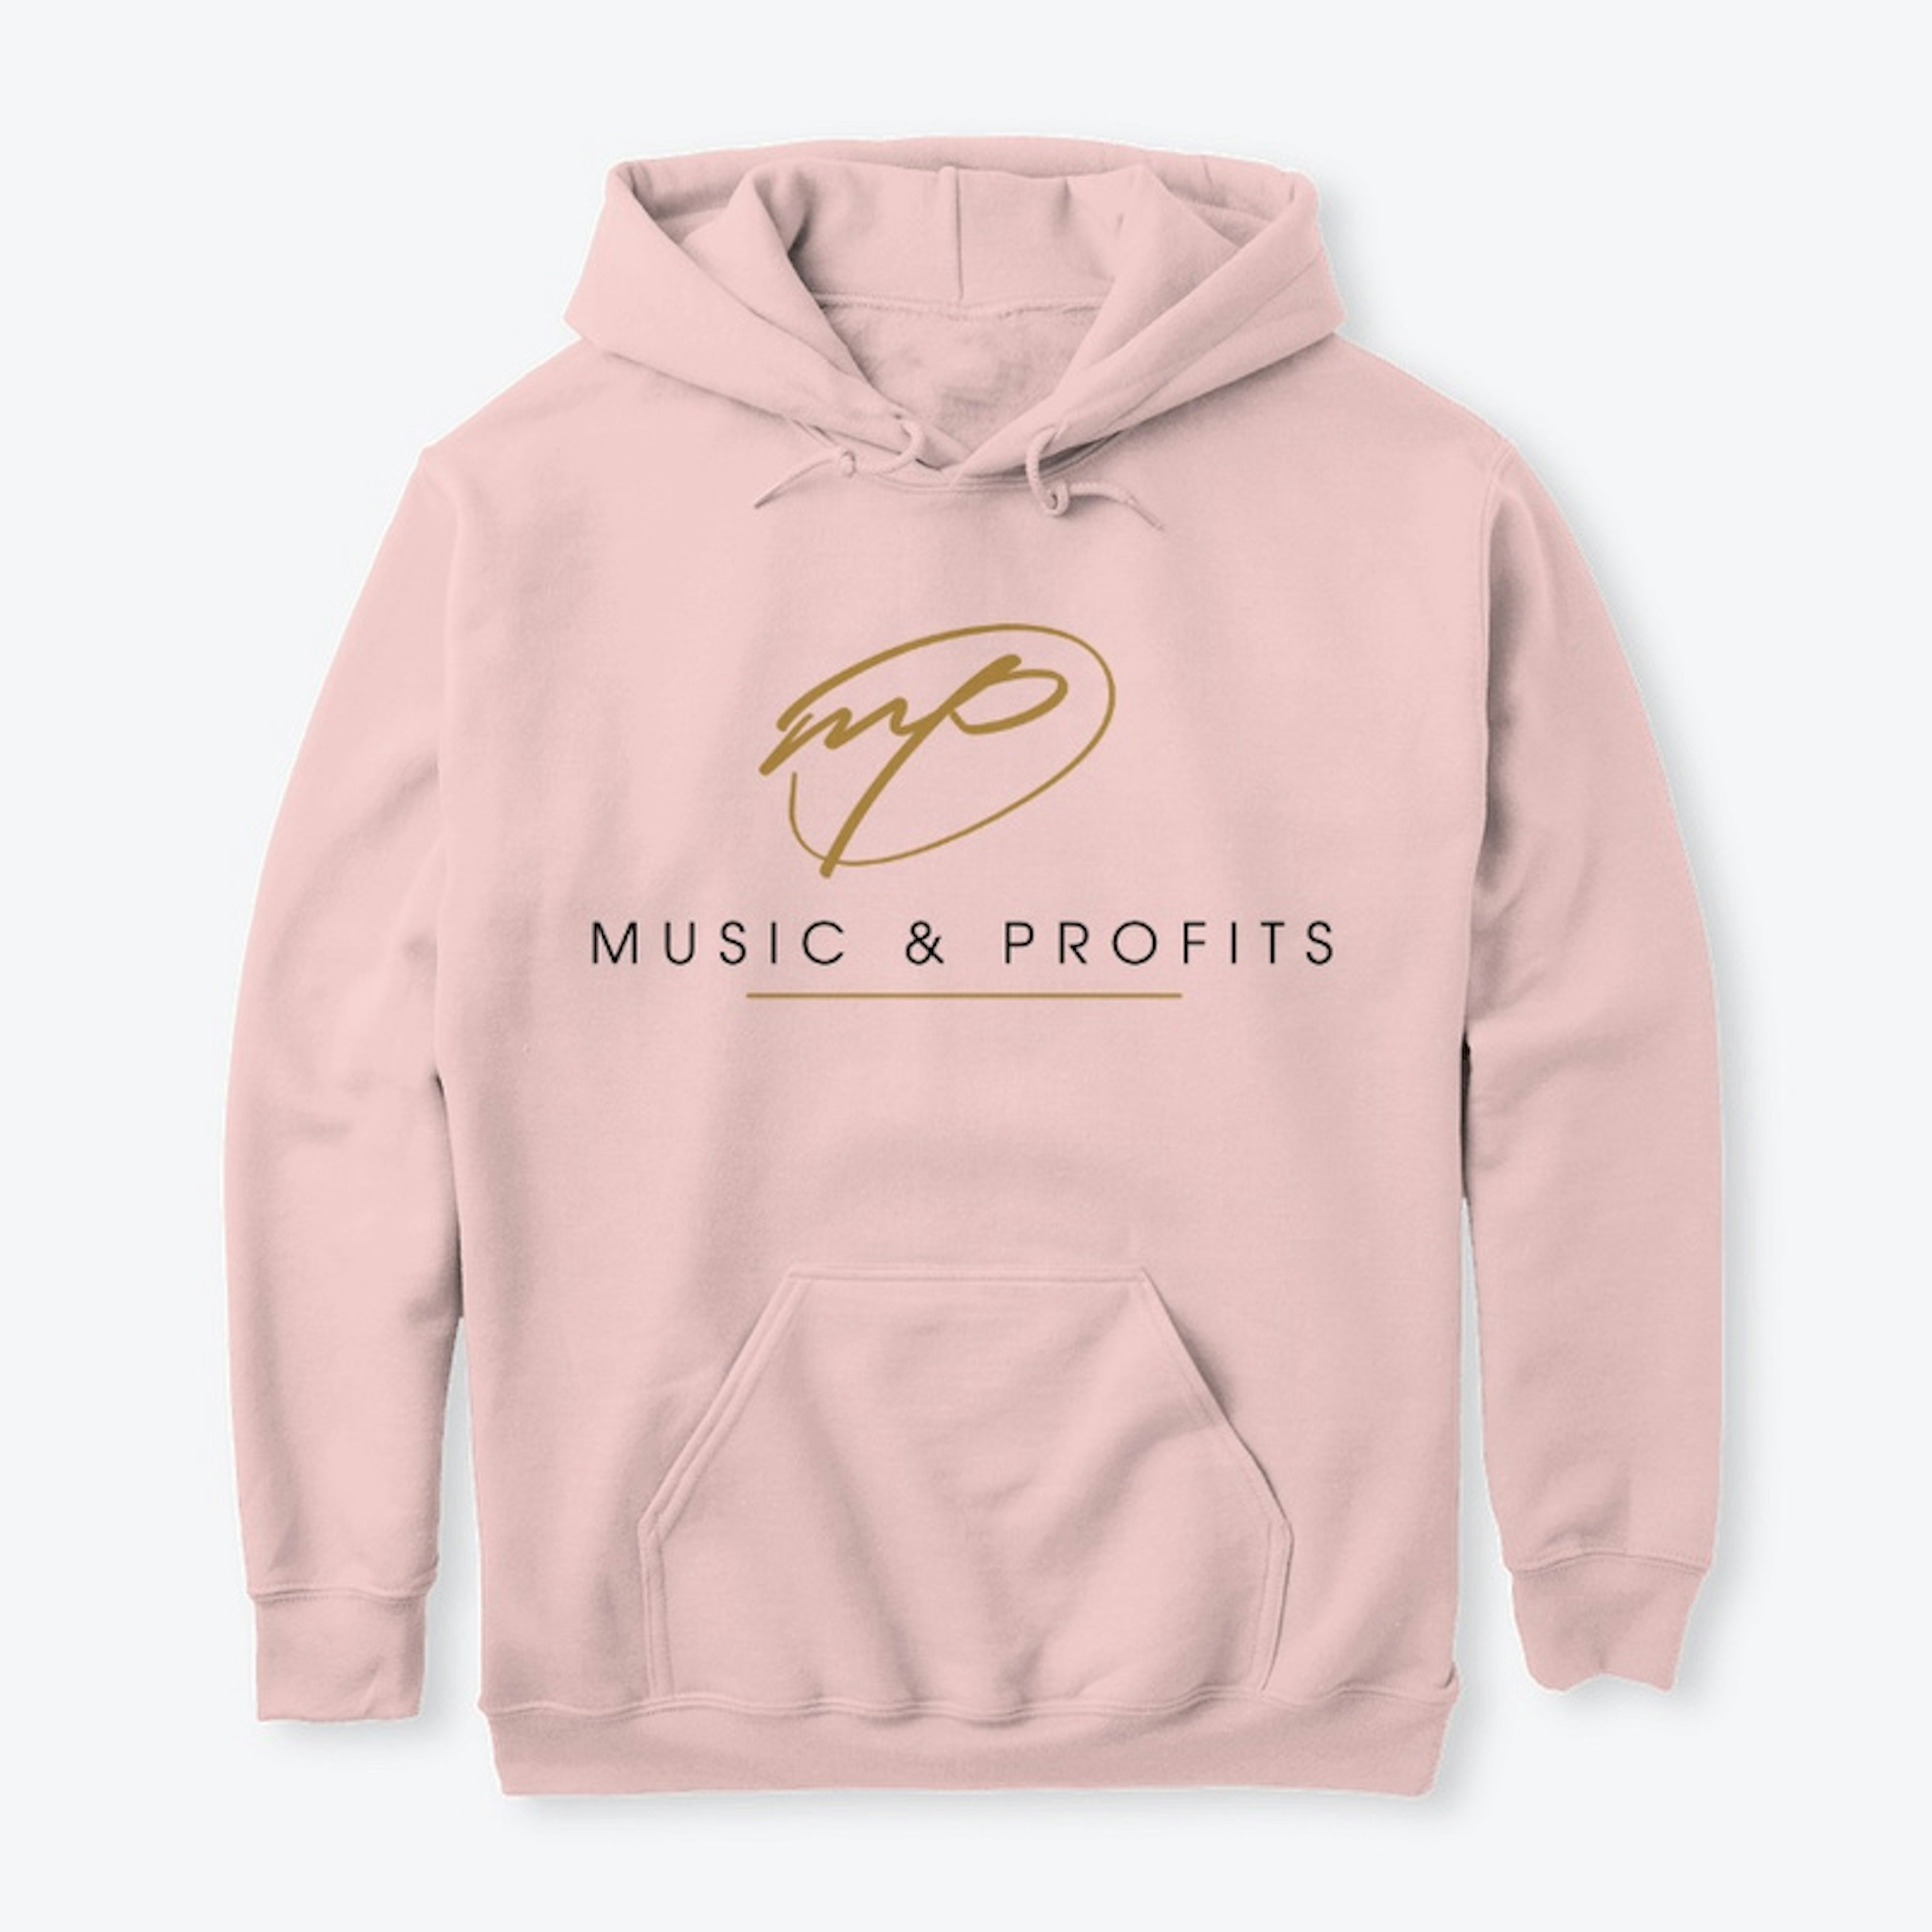 Music & Profits gold logo